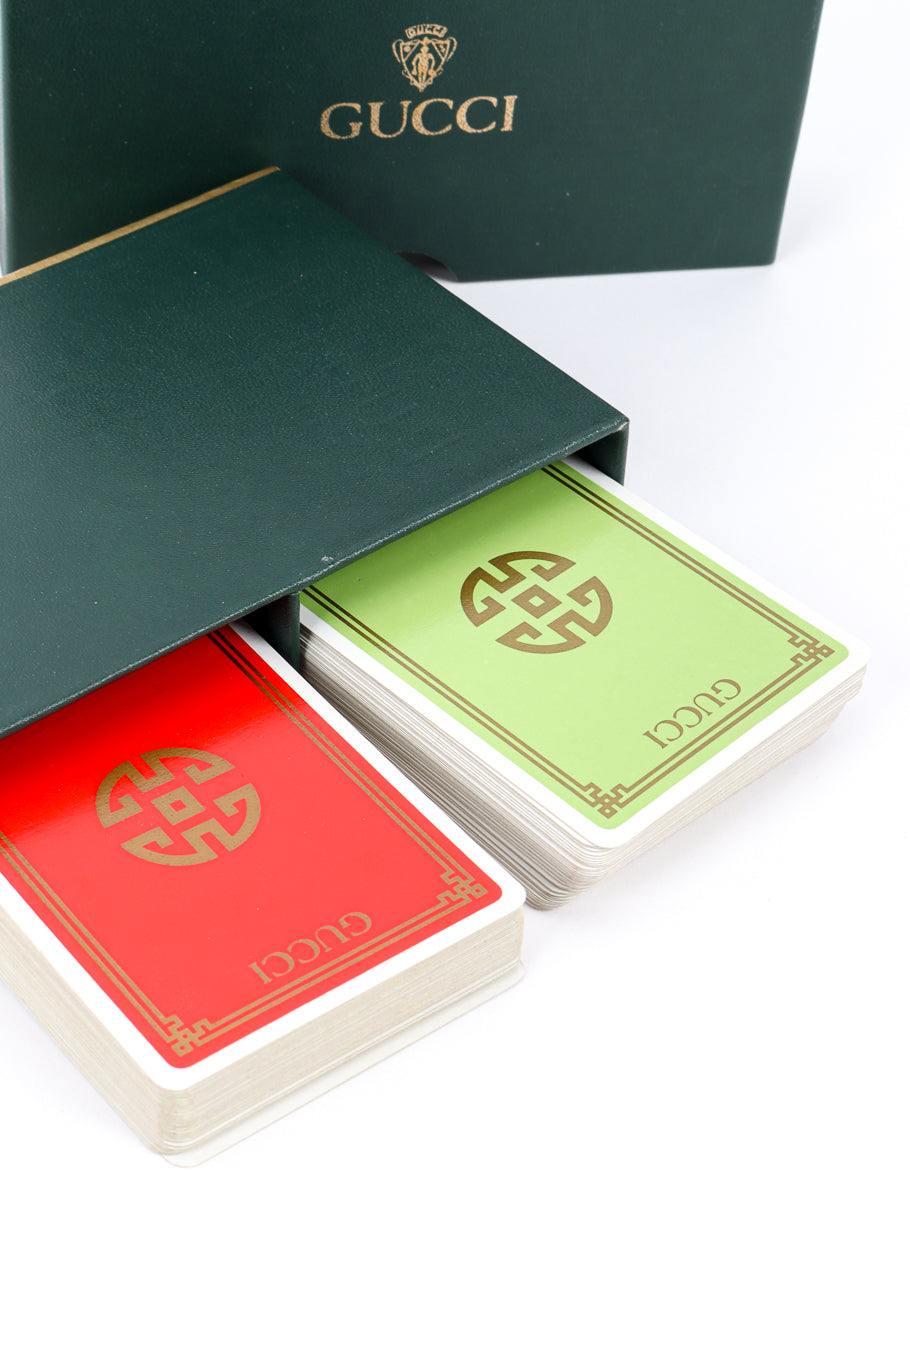 Vintage Gucci Red & Green 2 Deck Playing Card Set II decks in box closeup @recessla